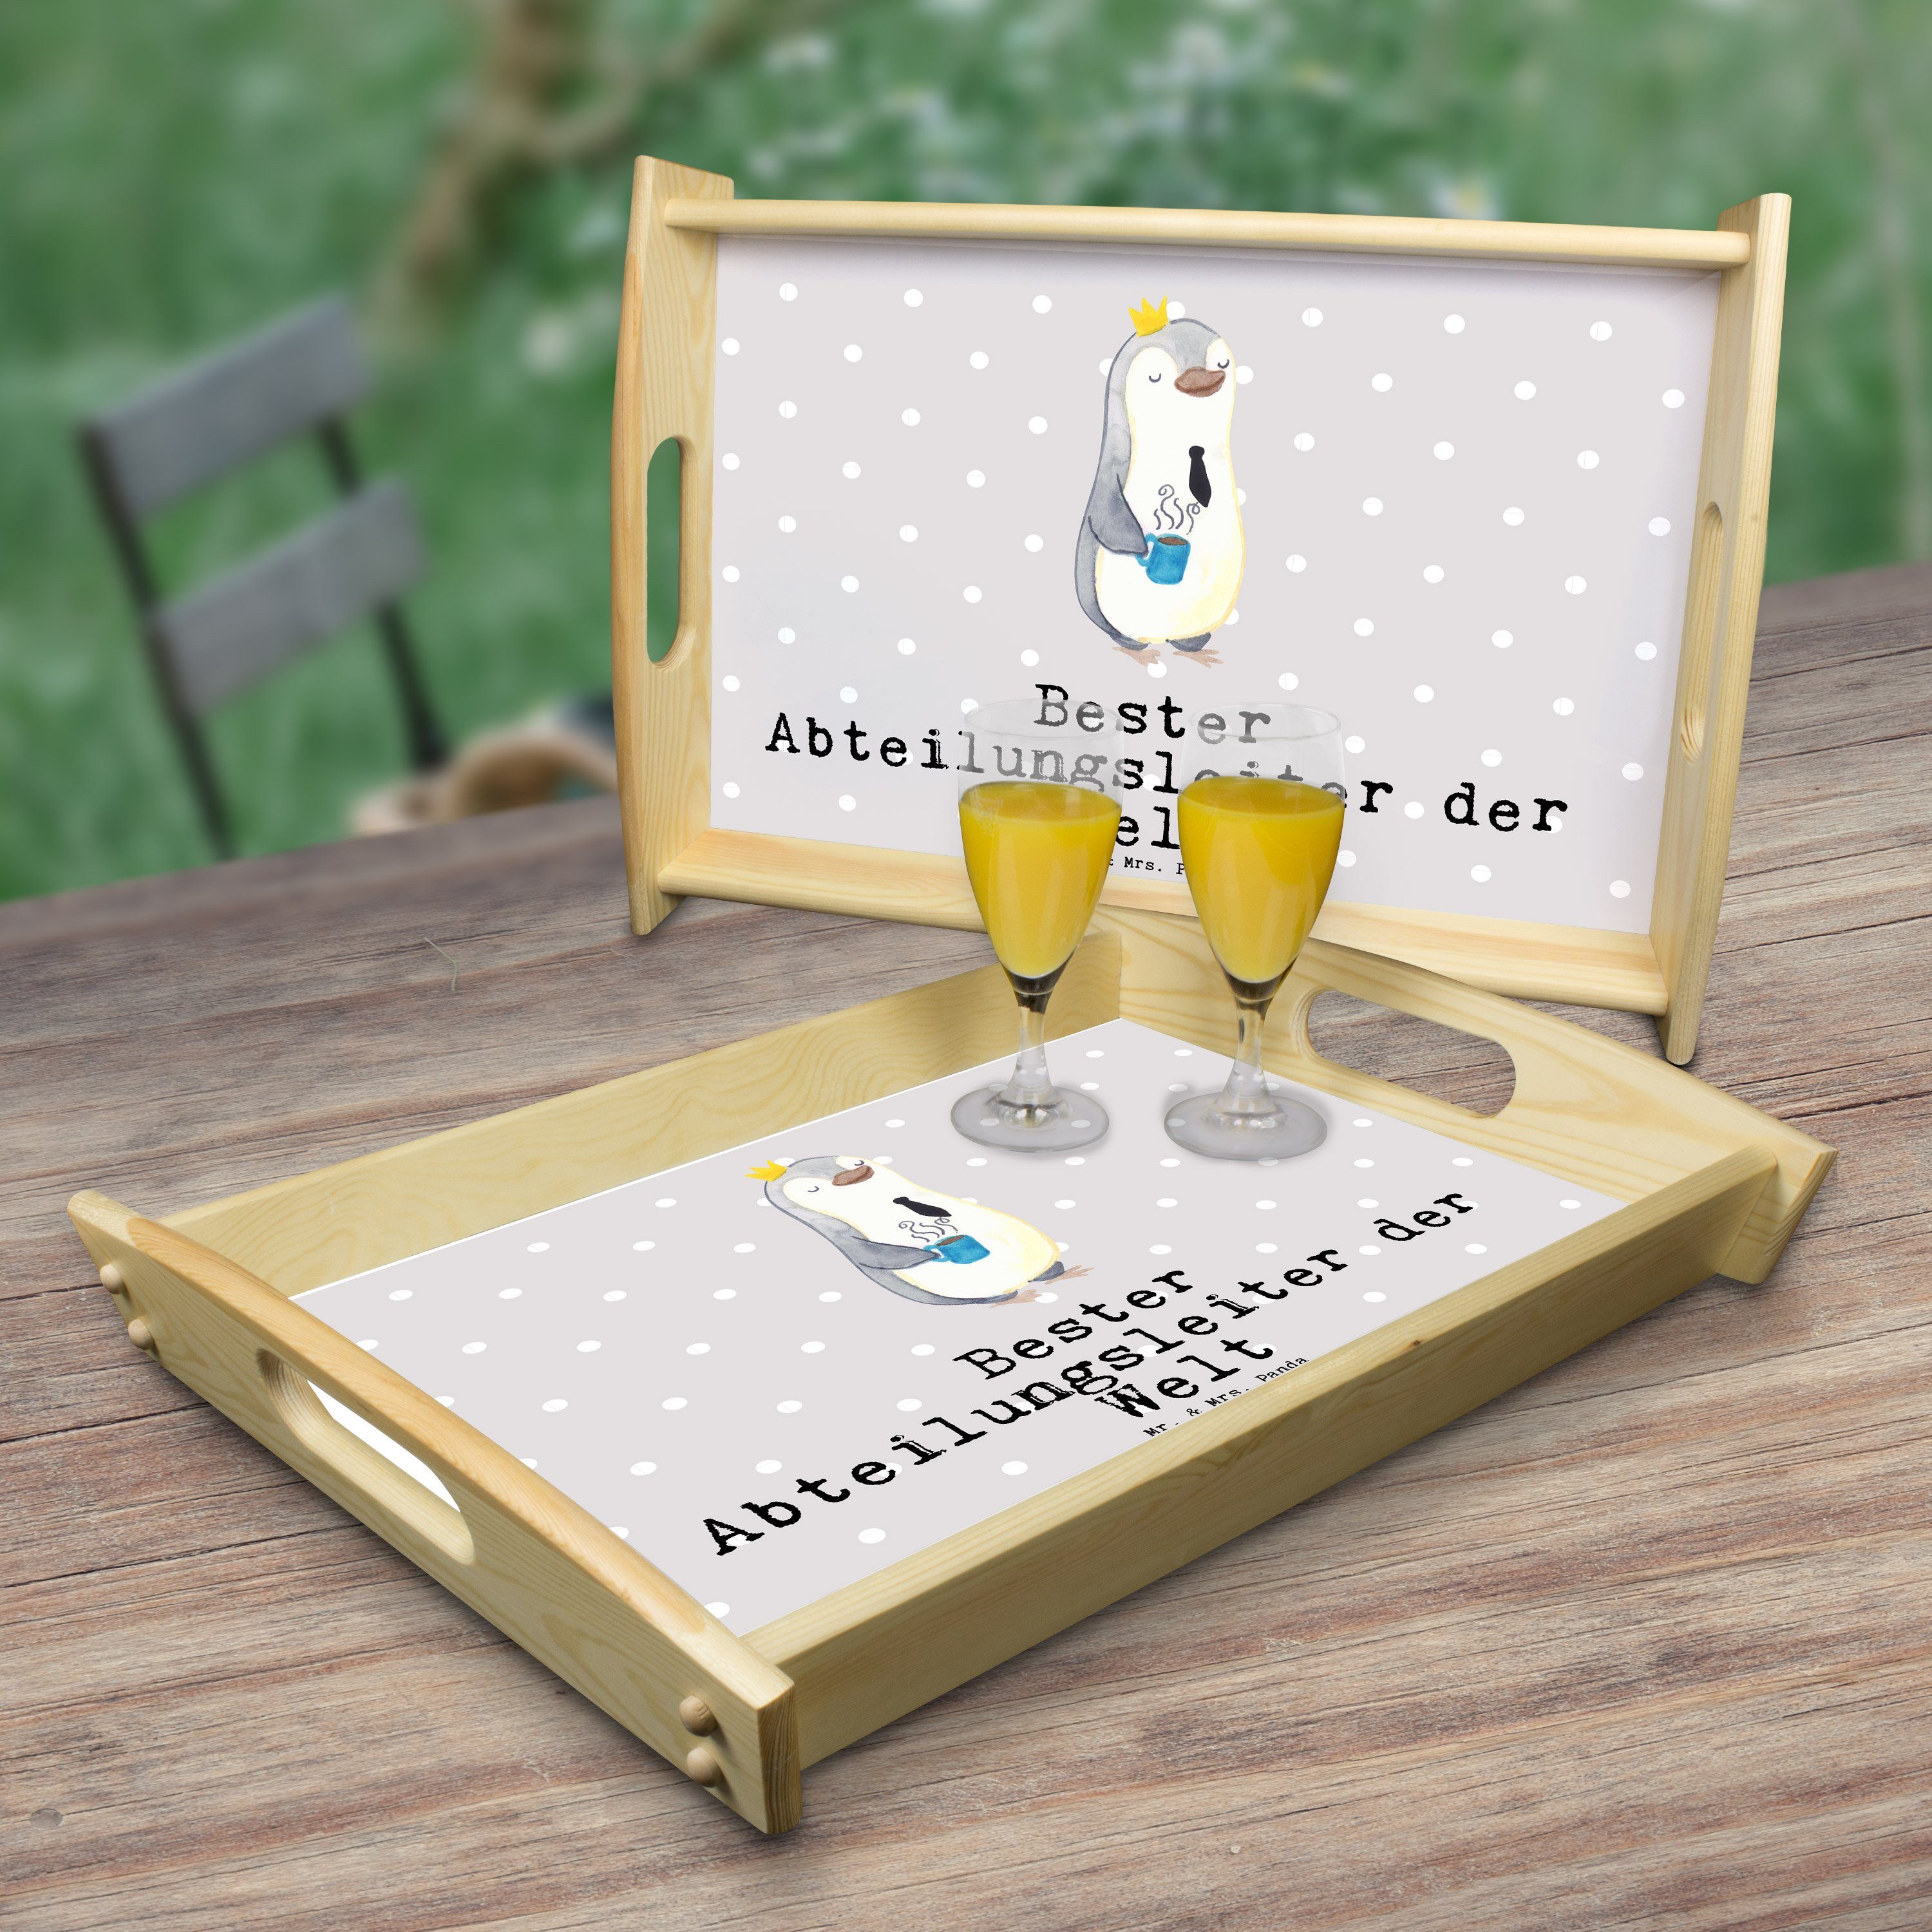 Mr. & Mrs. Pinguin Geschenk, - Abteilungsleiter der G, lasiert, Panda Grau Bester Tablett - Echtholz Pastell (1-tlg) Welt